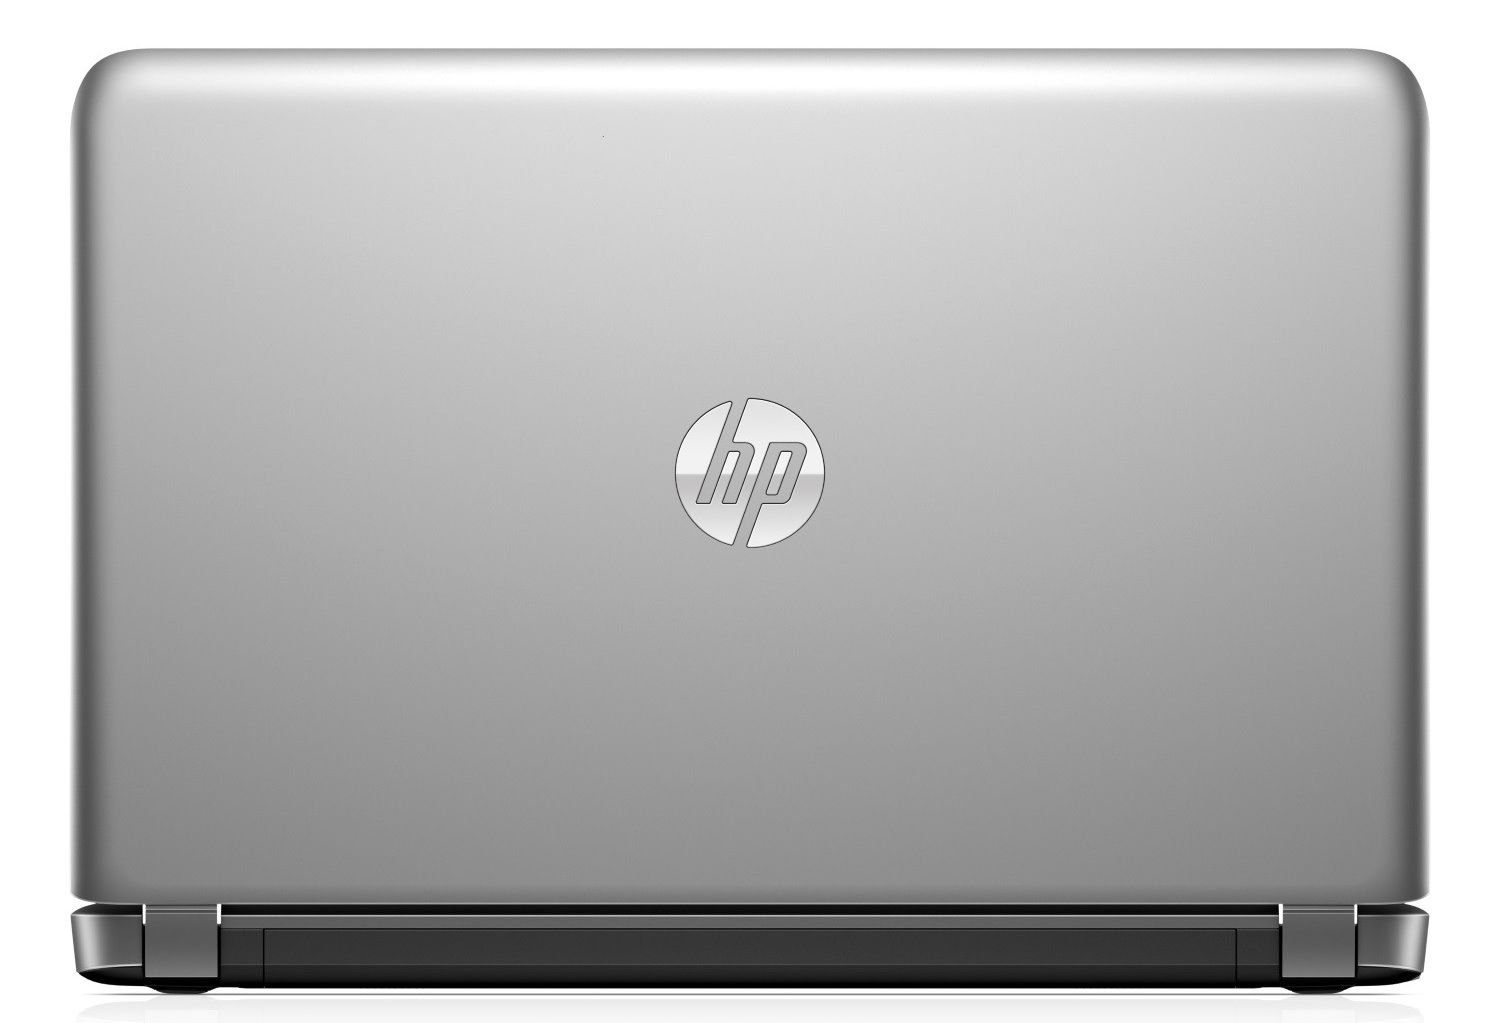 PC HP Pavilion 17 notebook dual